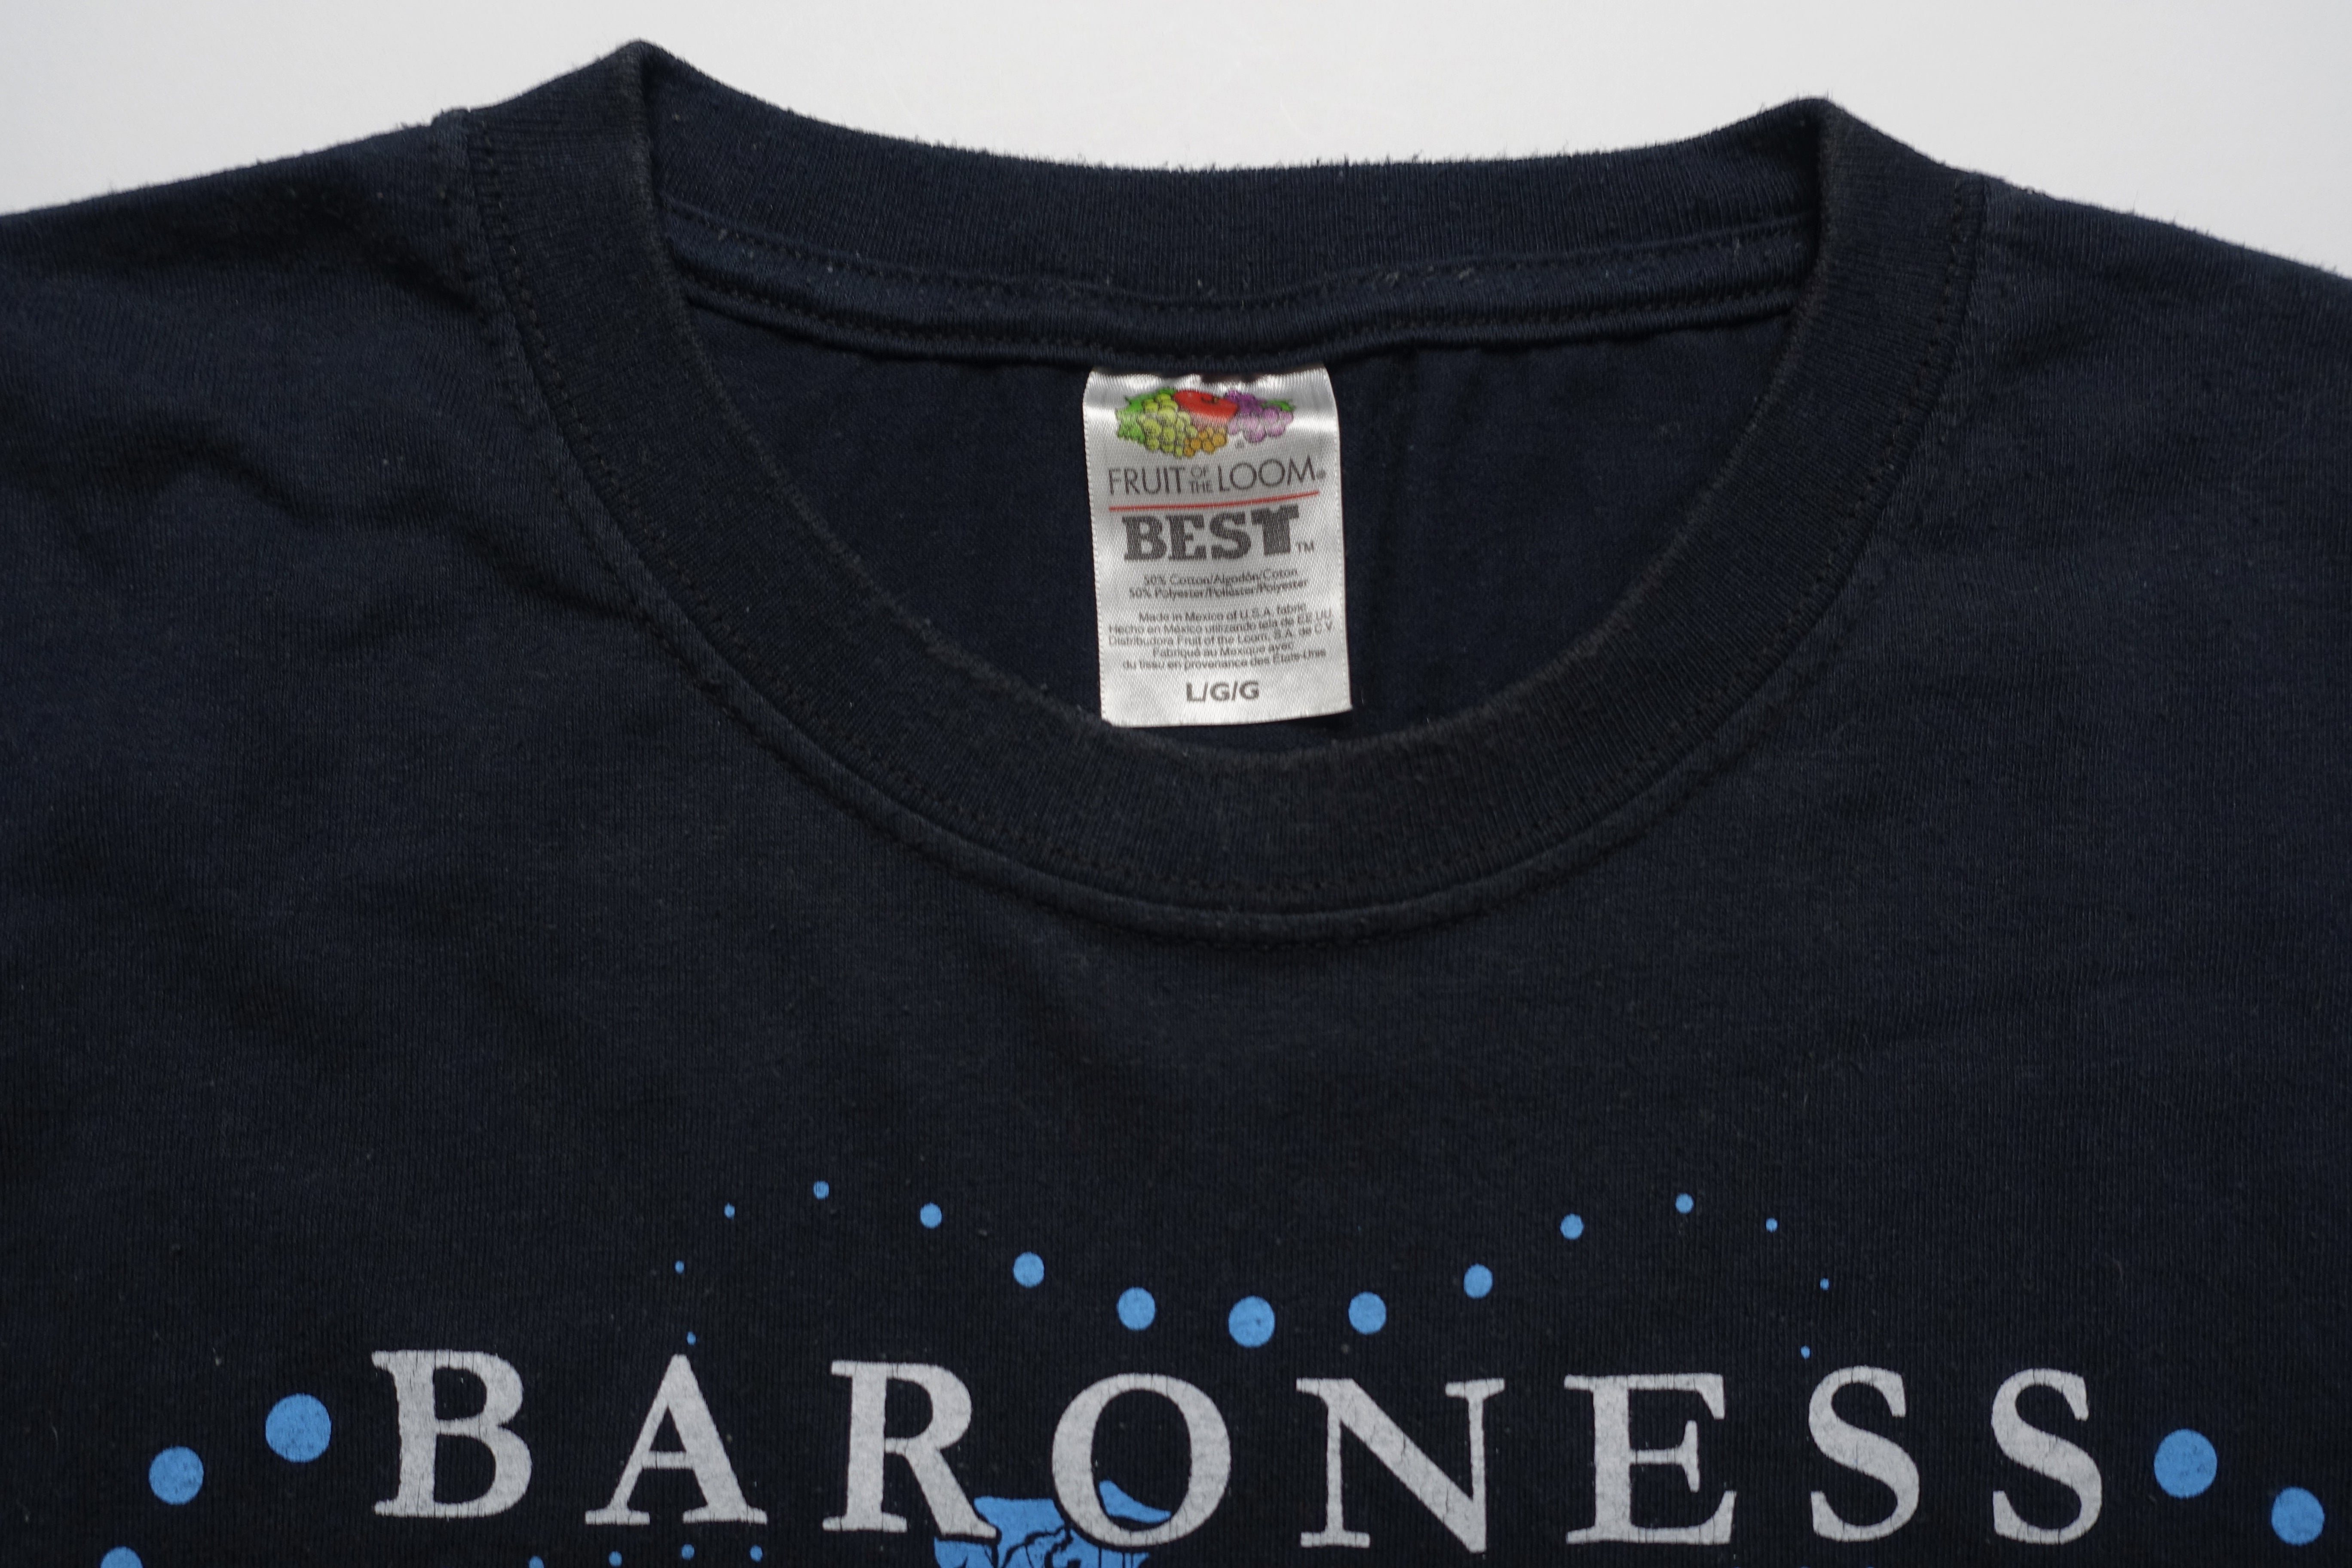 Baroness – Blue Skull Tour Shirt Size Large